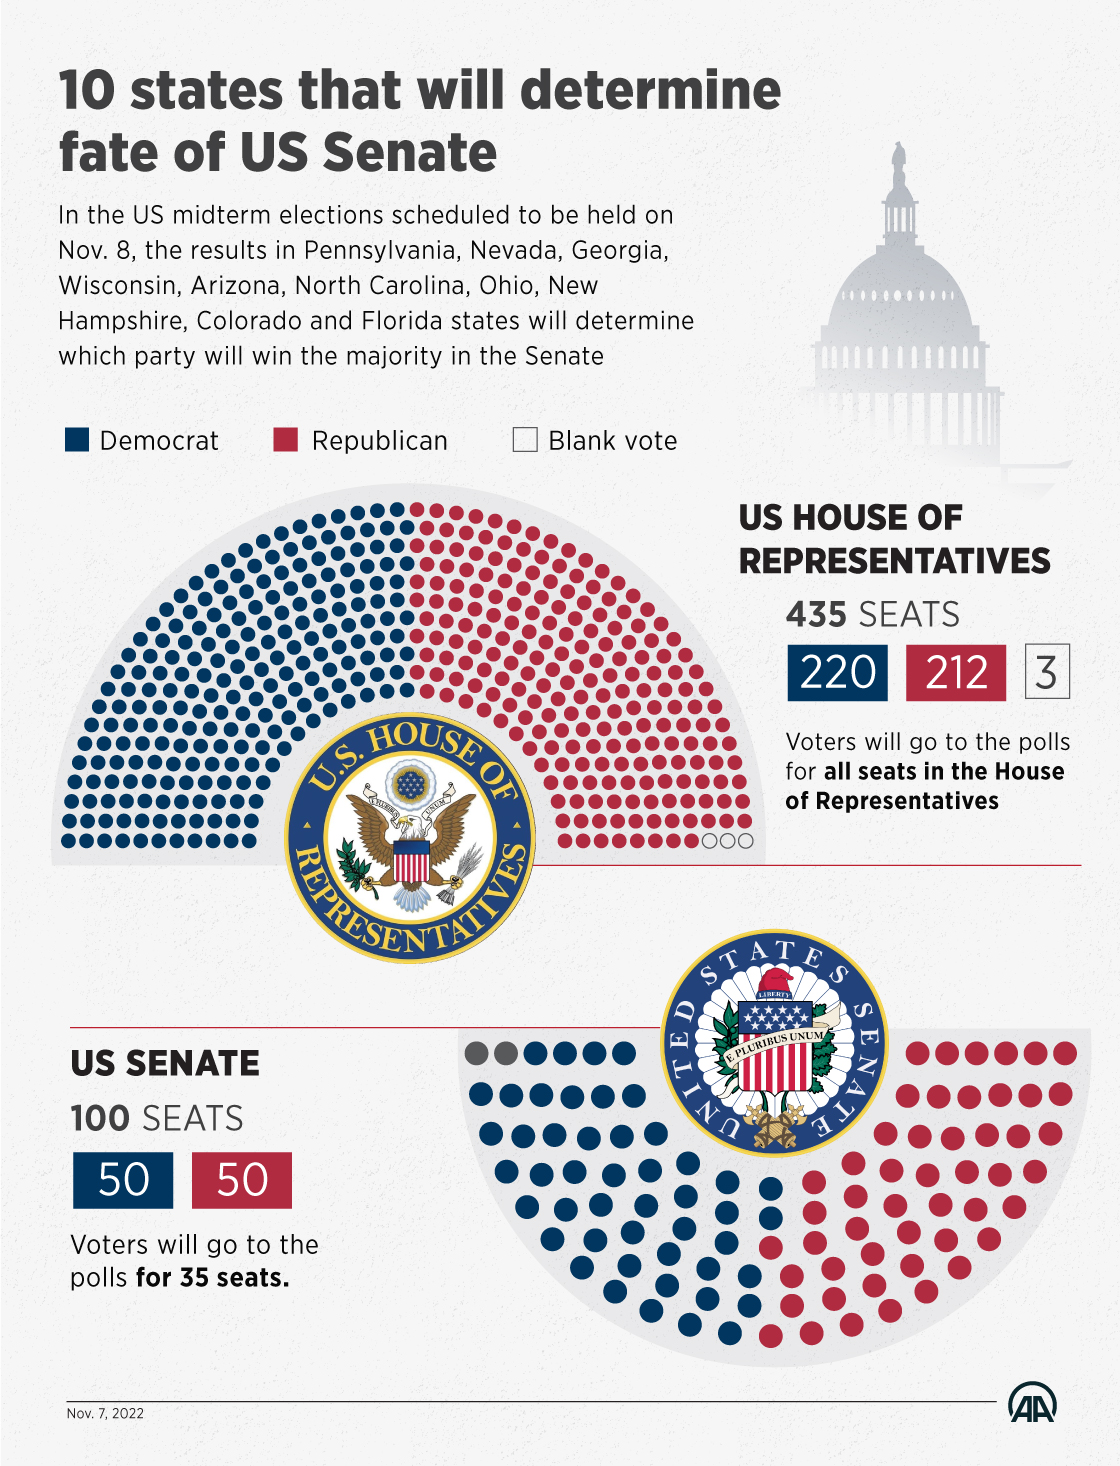 10 states that will determine fate of US Senate